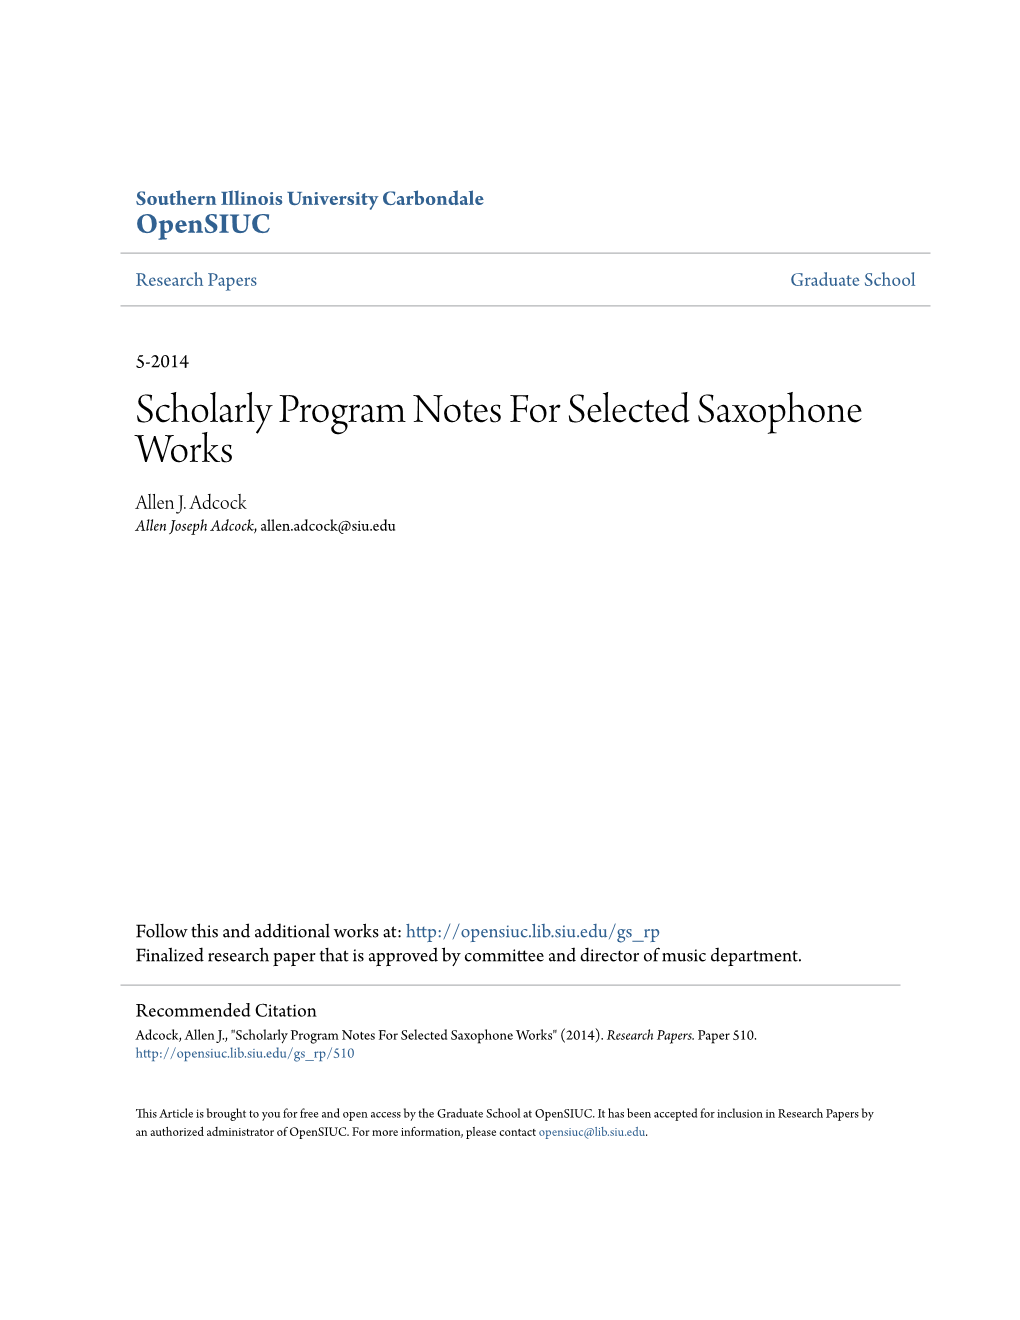 Scholarly Program Notes for Selected Saxophone Works Allen J